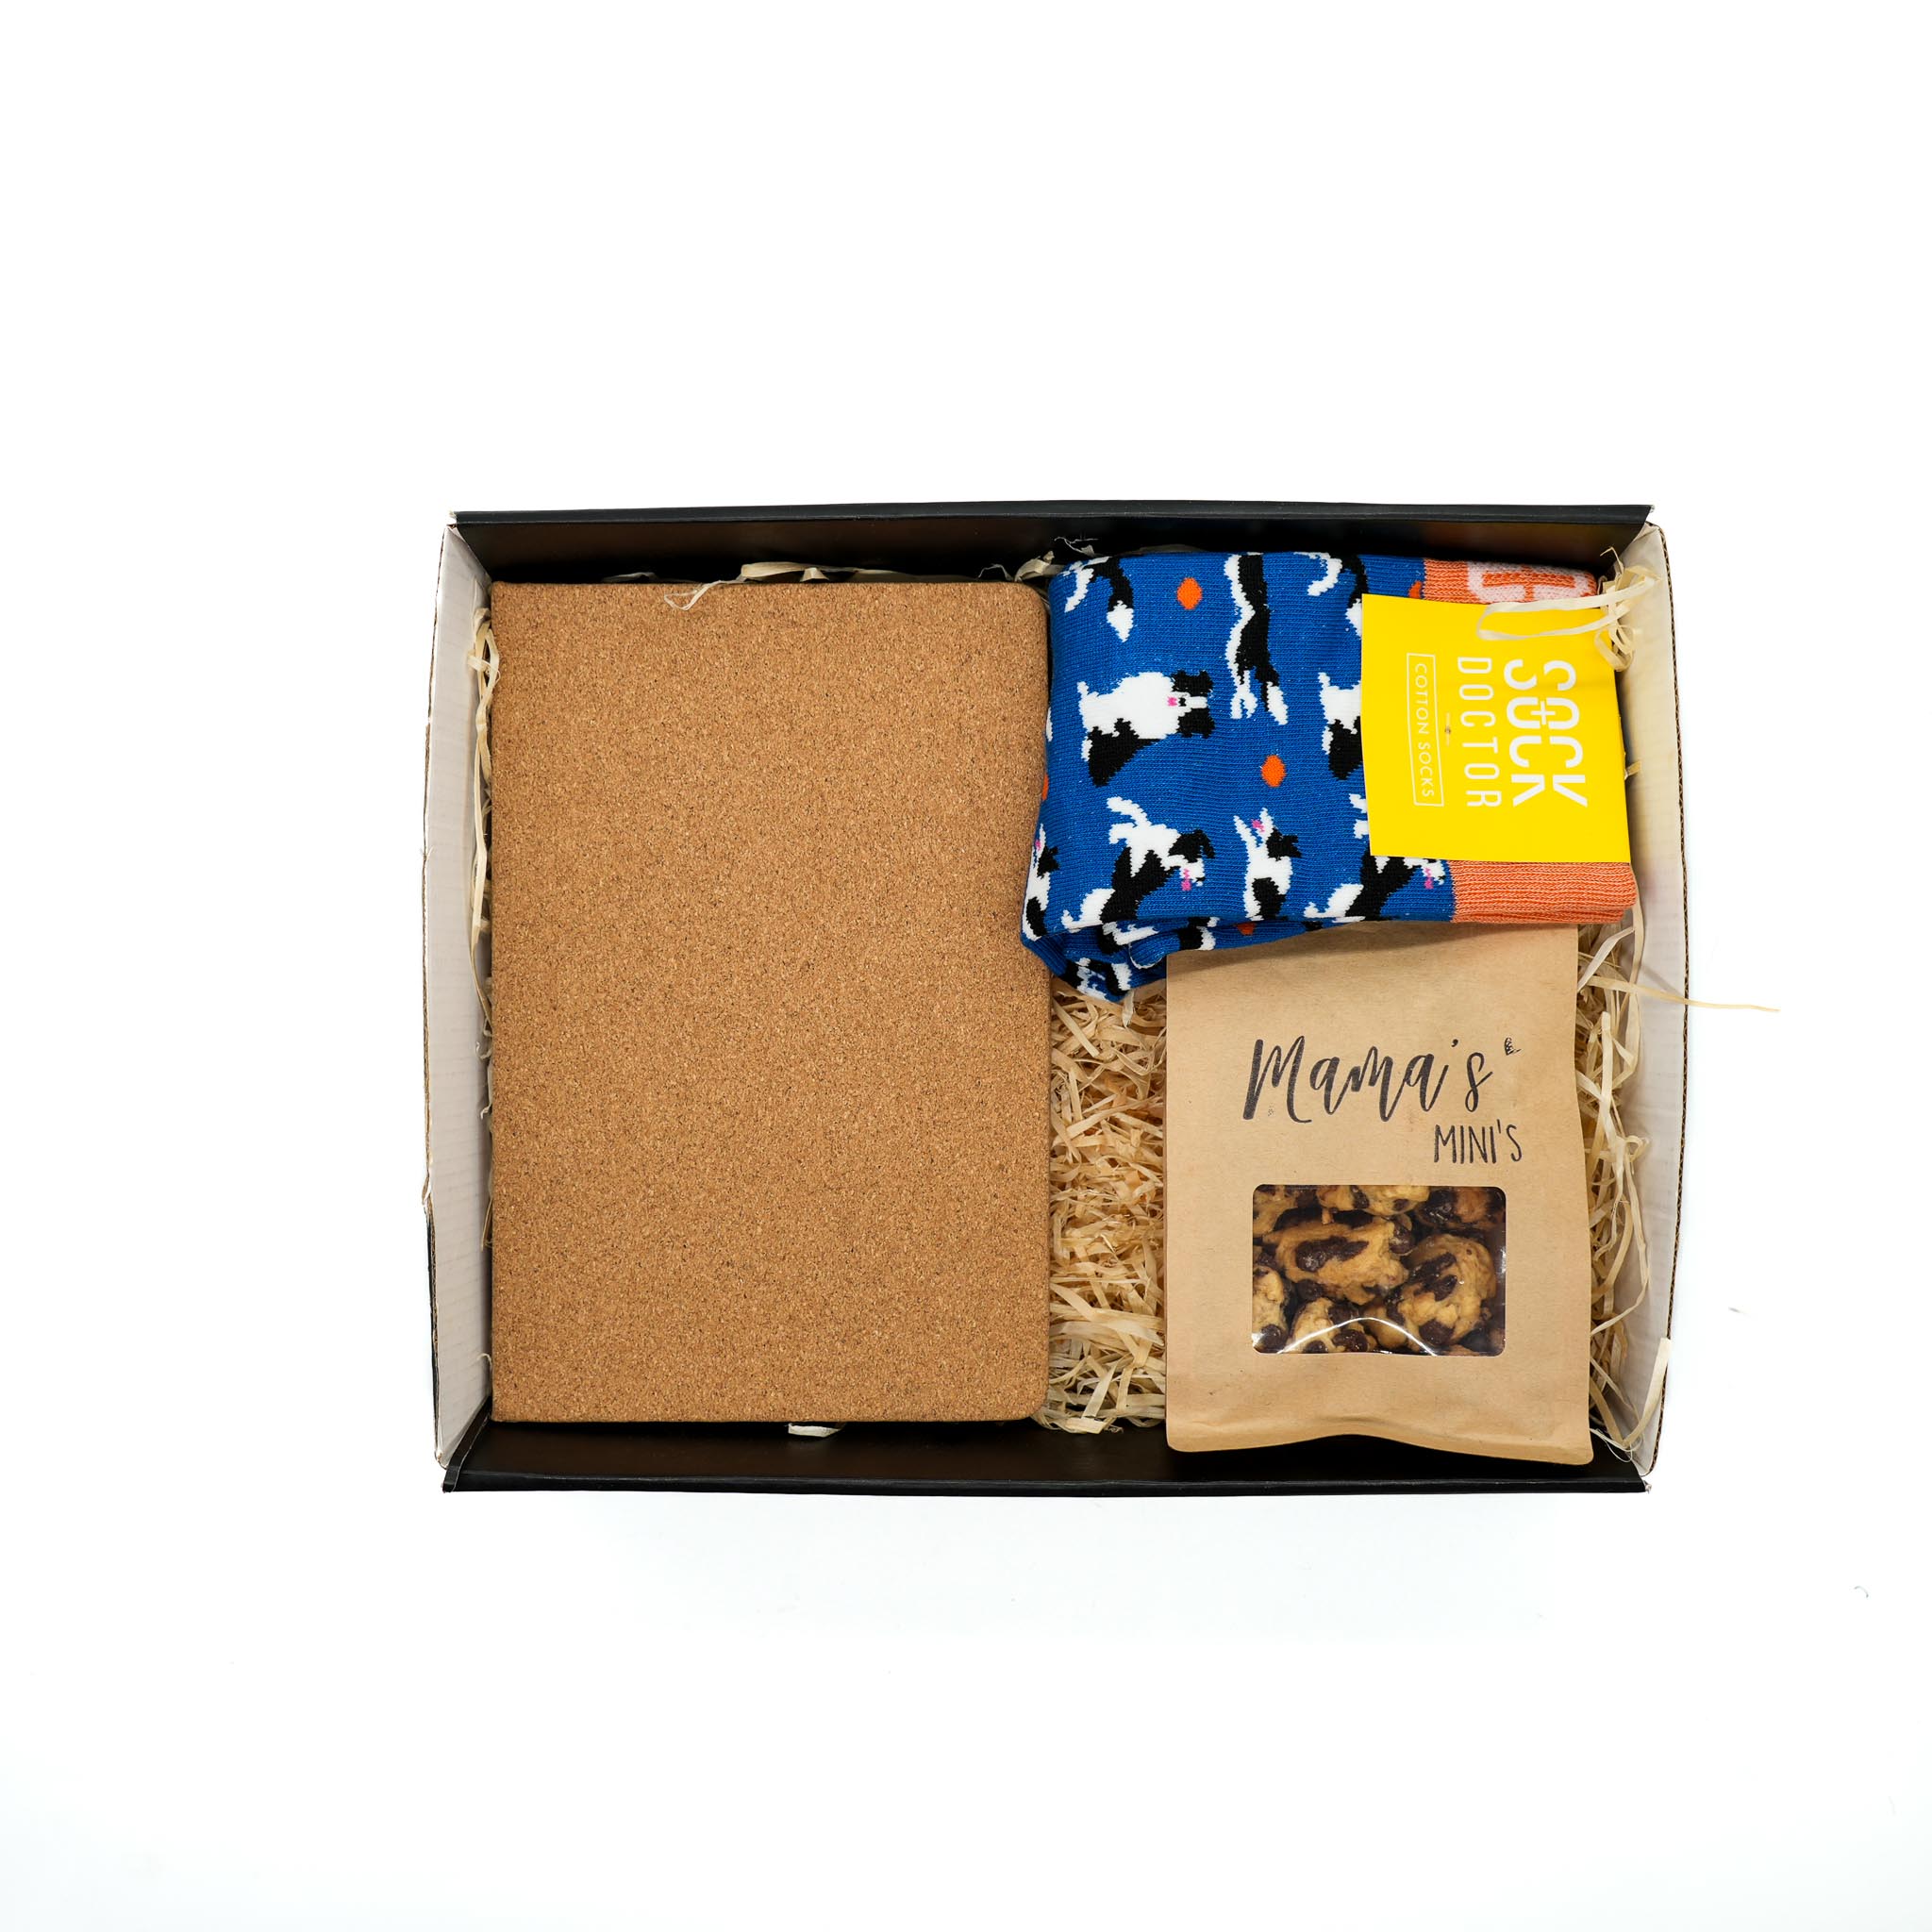 socks, snacks & stationery gift box ground culture